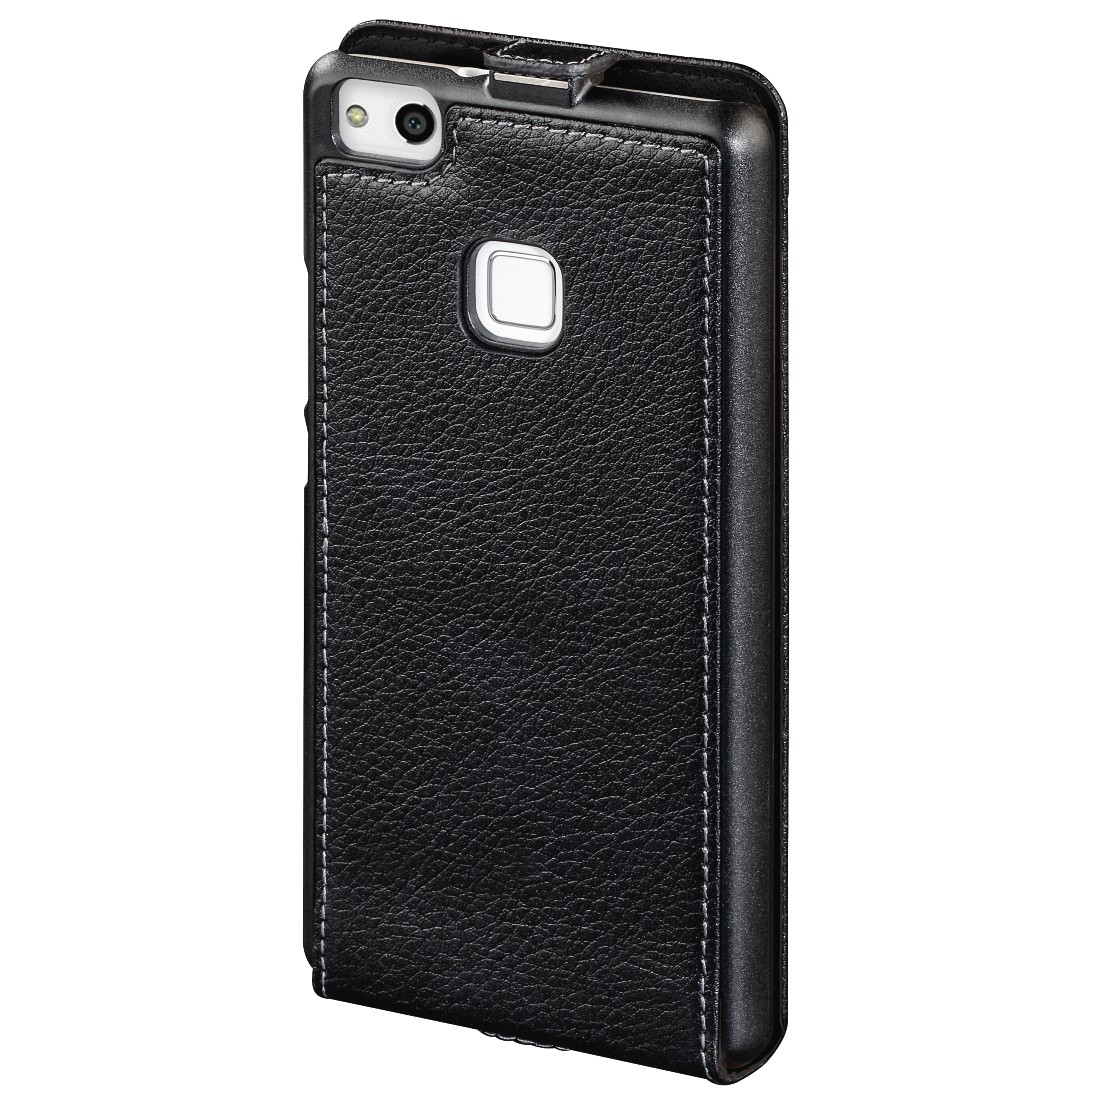 00181239 Hama "Smart Case" Flap Case for Huawei P10 Lite, black